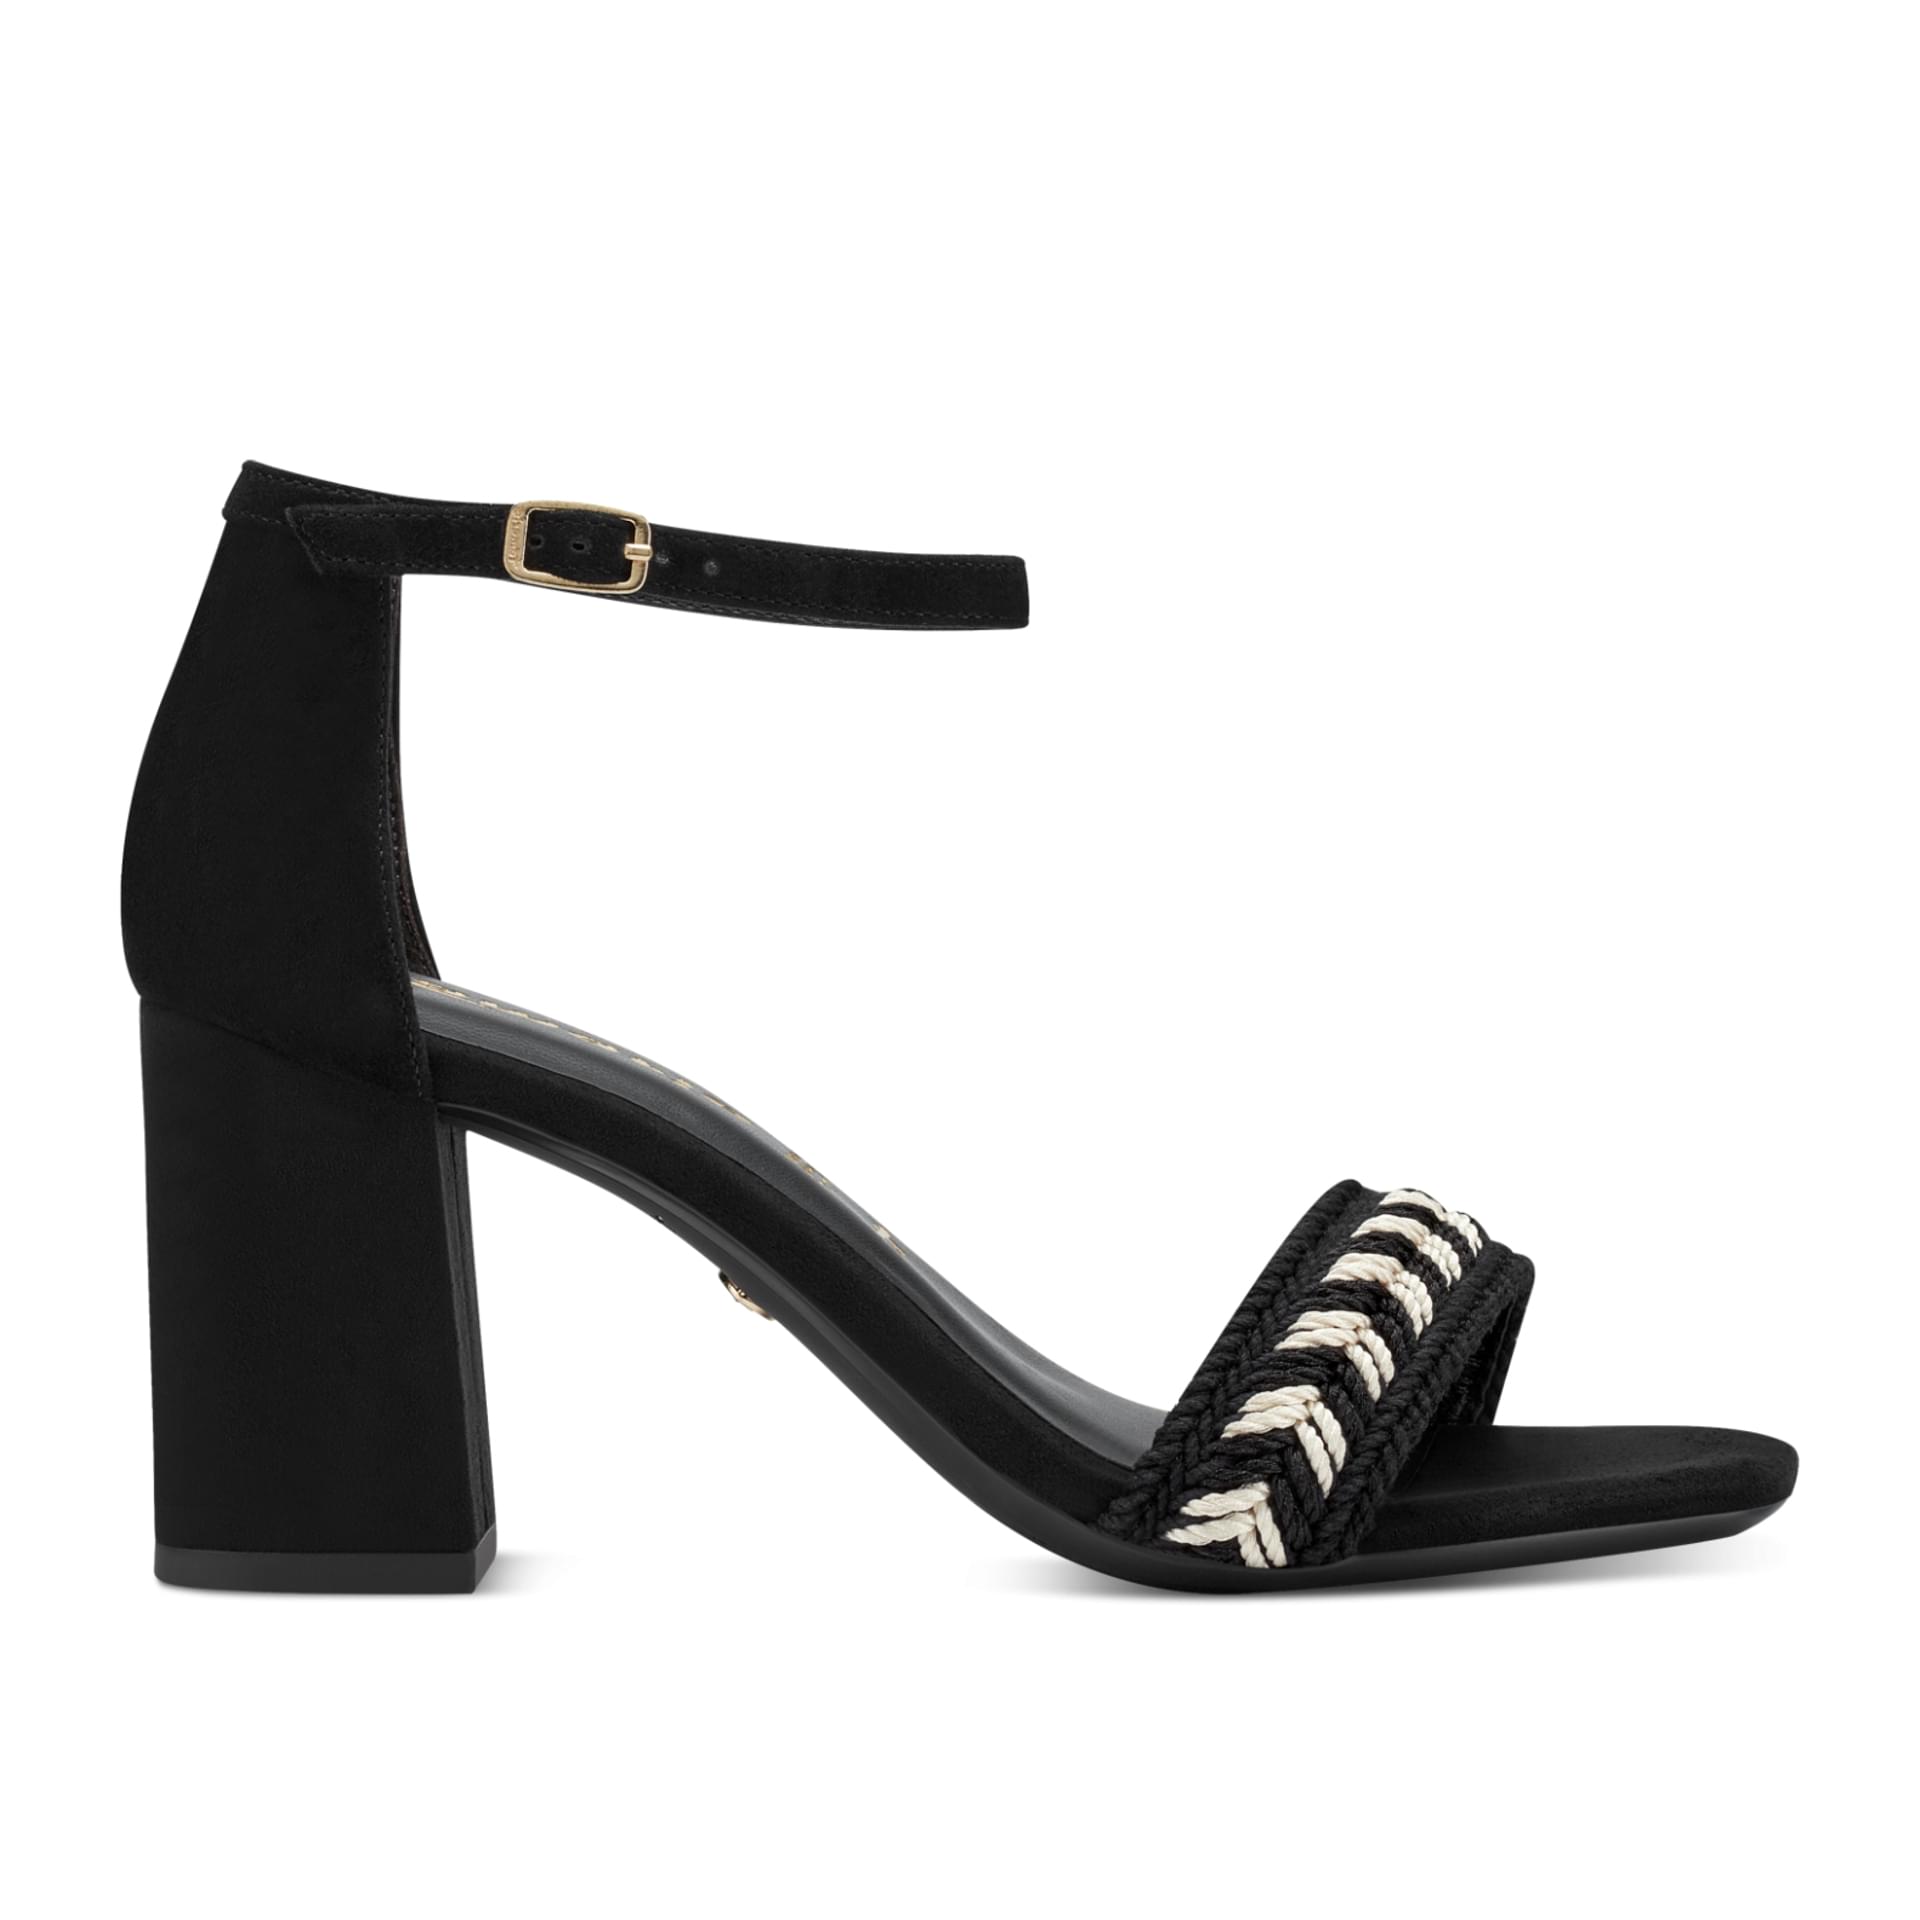 Tamaris Sadira Sandals 1-1-28362-20 in Black